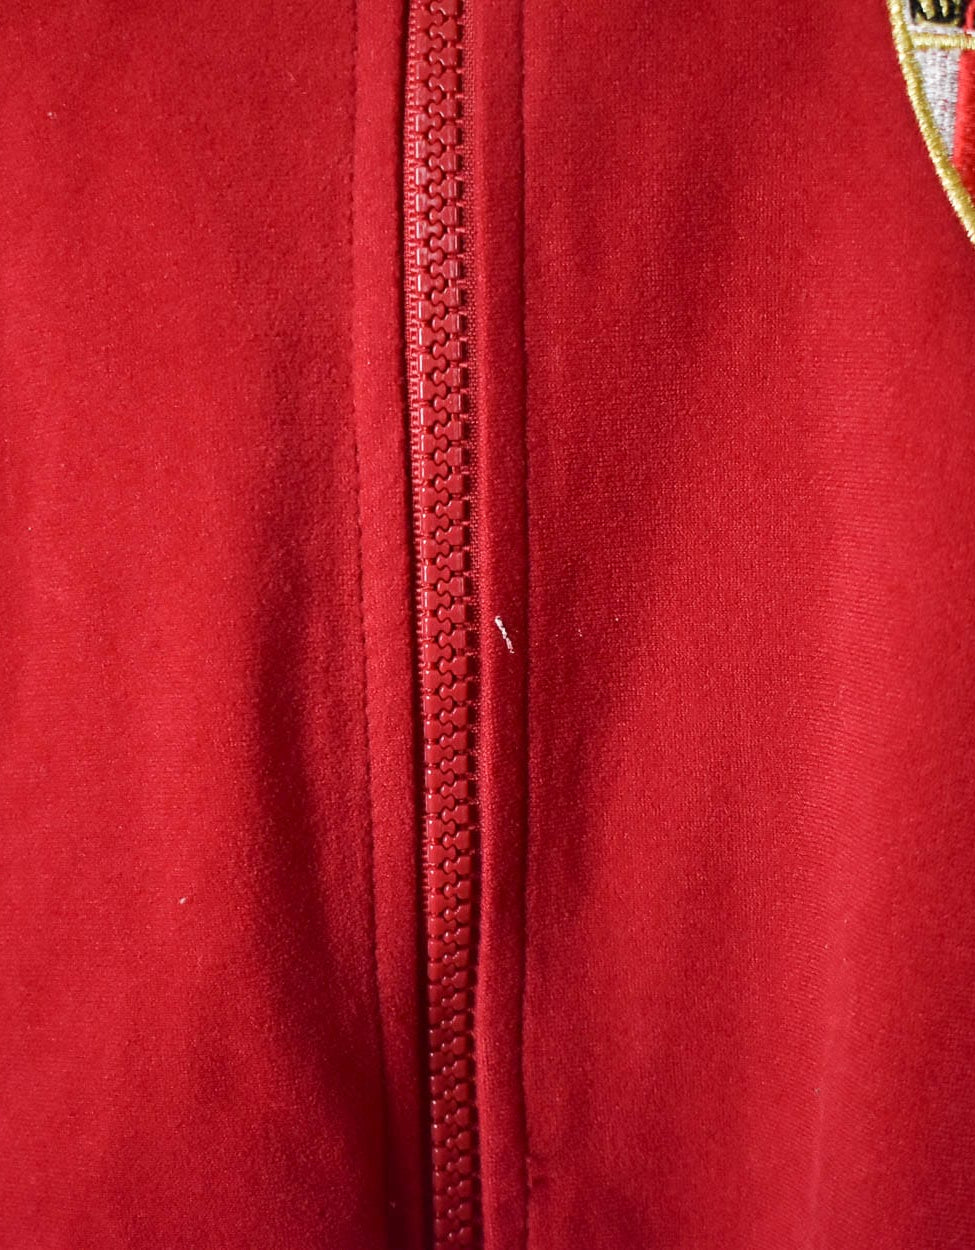 Red Umbro Servilla 1995/96 Warmup Jacket - Large